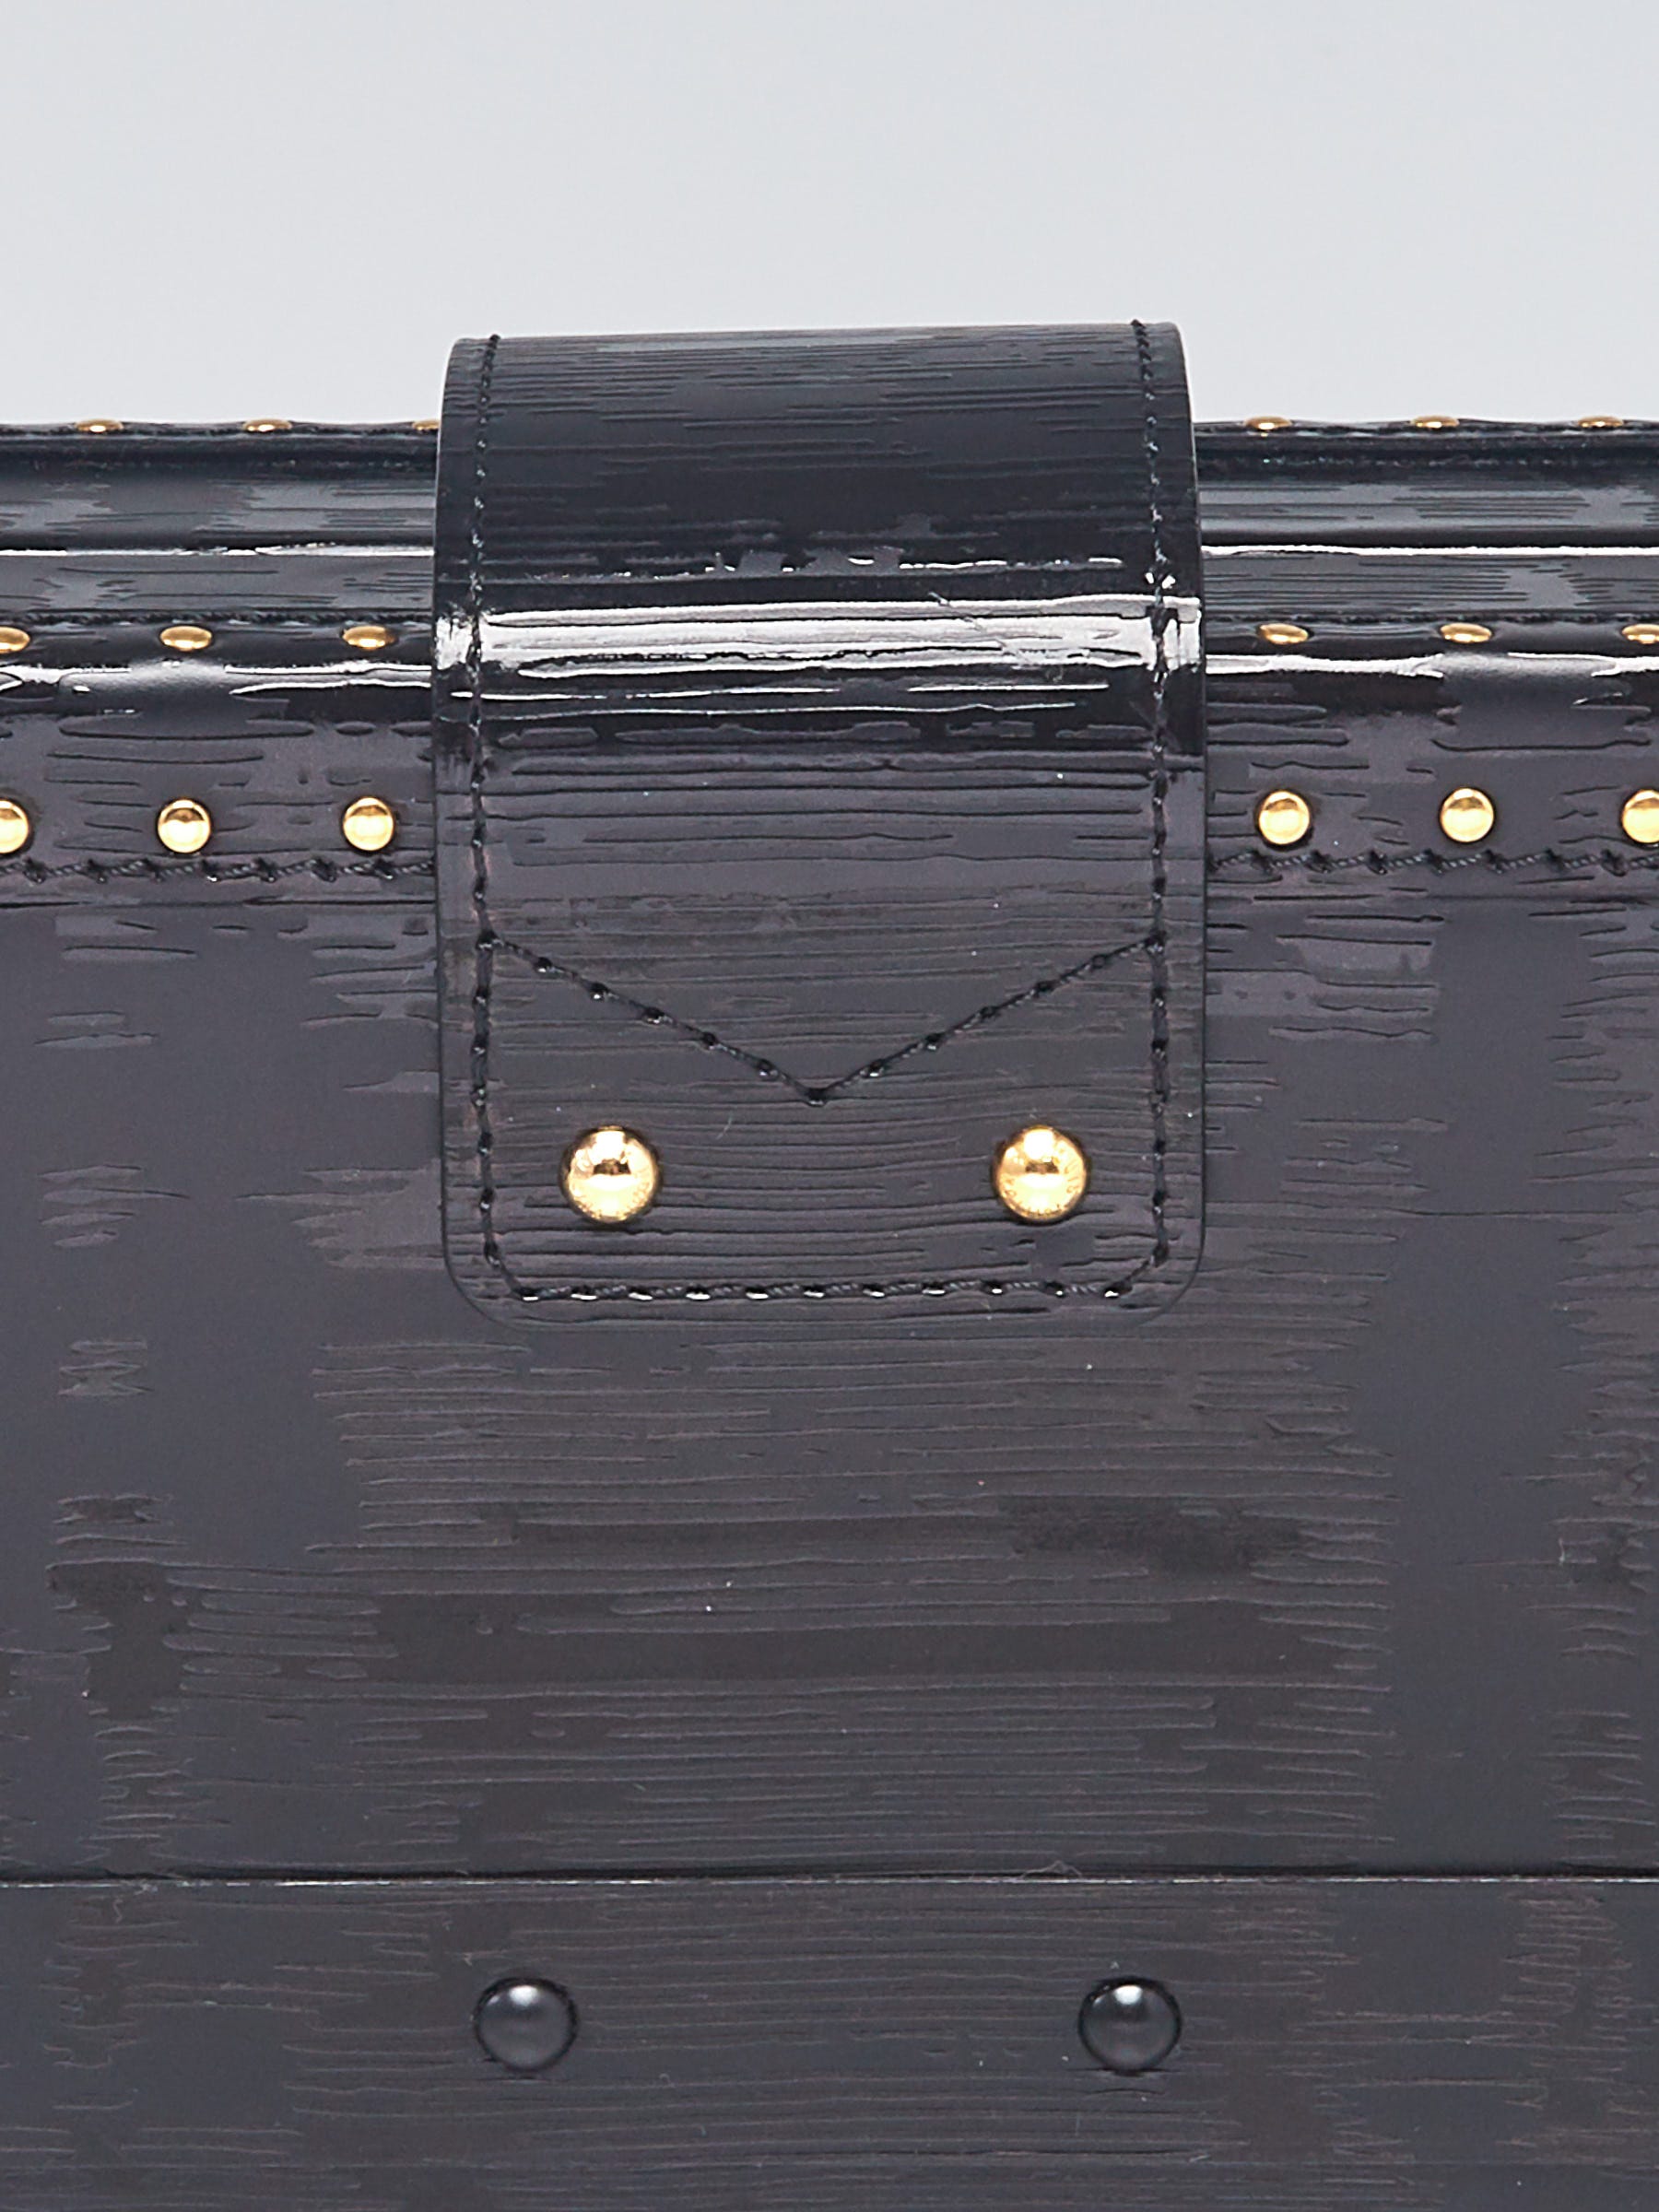 Louis Vuitton Black Epi Leather Black Gravity Petite Malle Bag